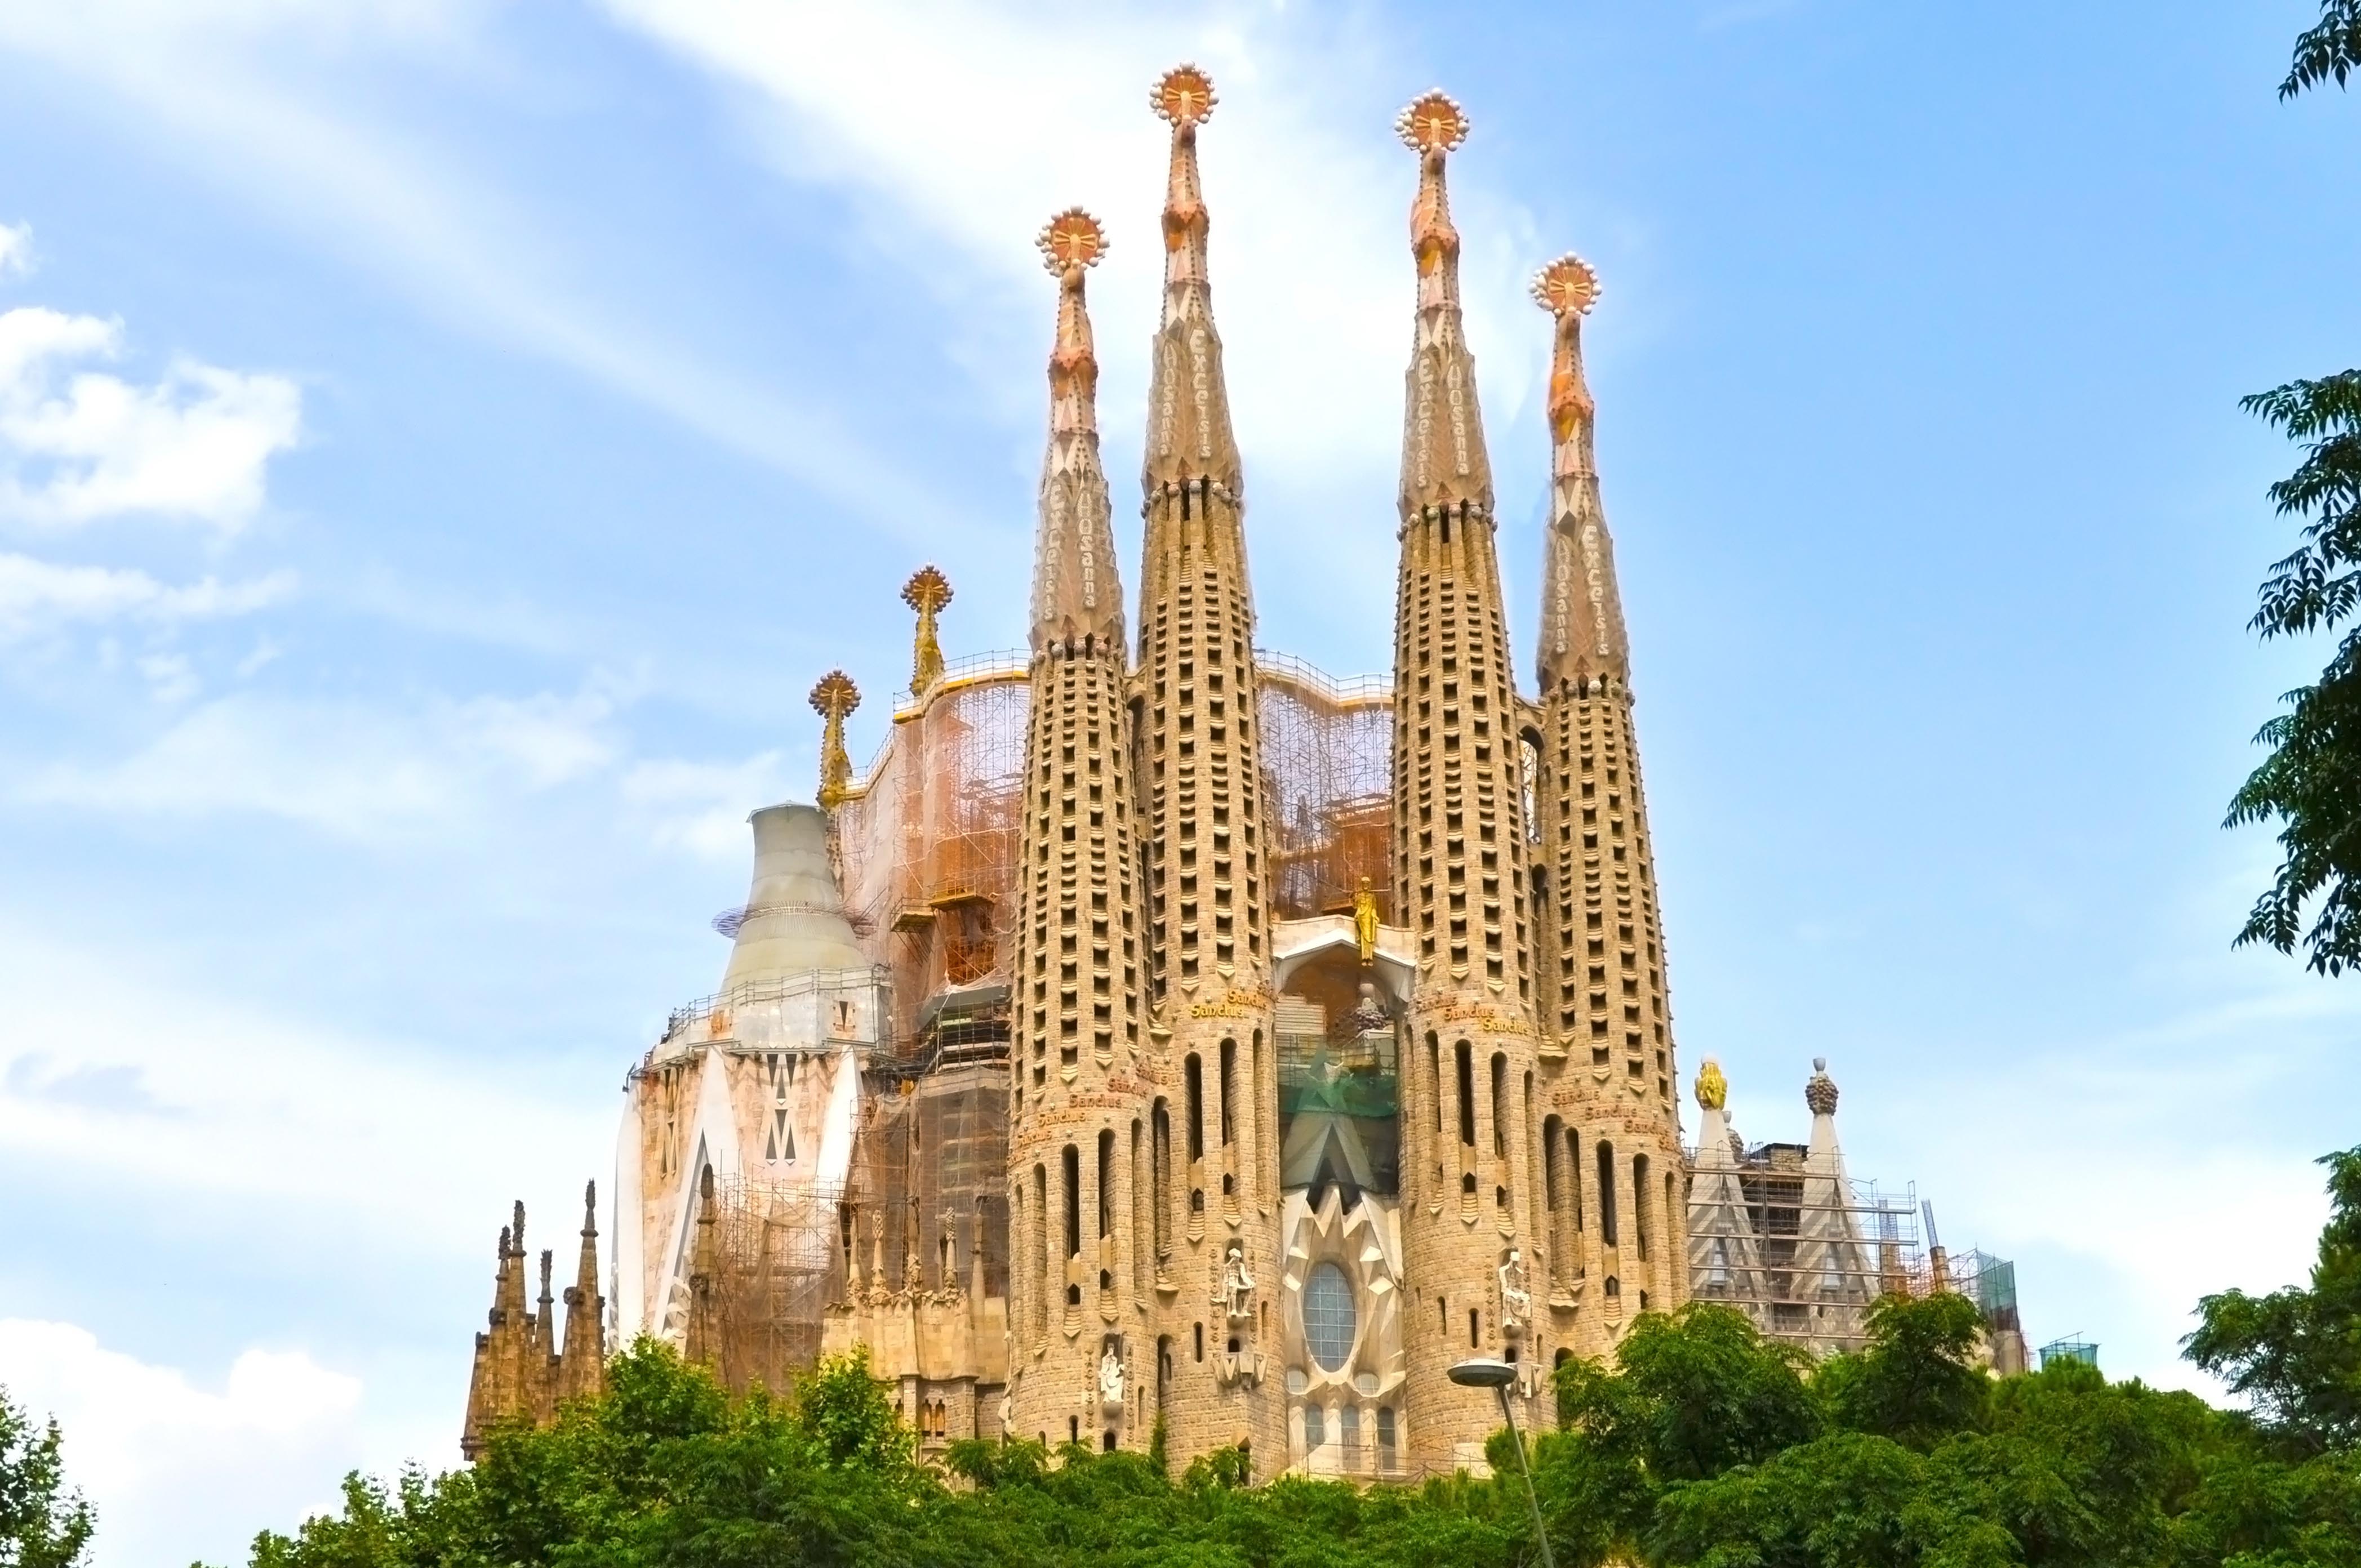 More information about "Η Sagrada Familia ολοκληρώνεται μετά από σχεδόν ενάμιση αιώνα – Η ιστορία του εμβληματικού ναού της Βαρκελώνης"